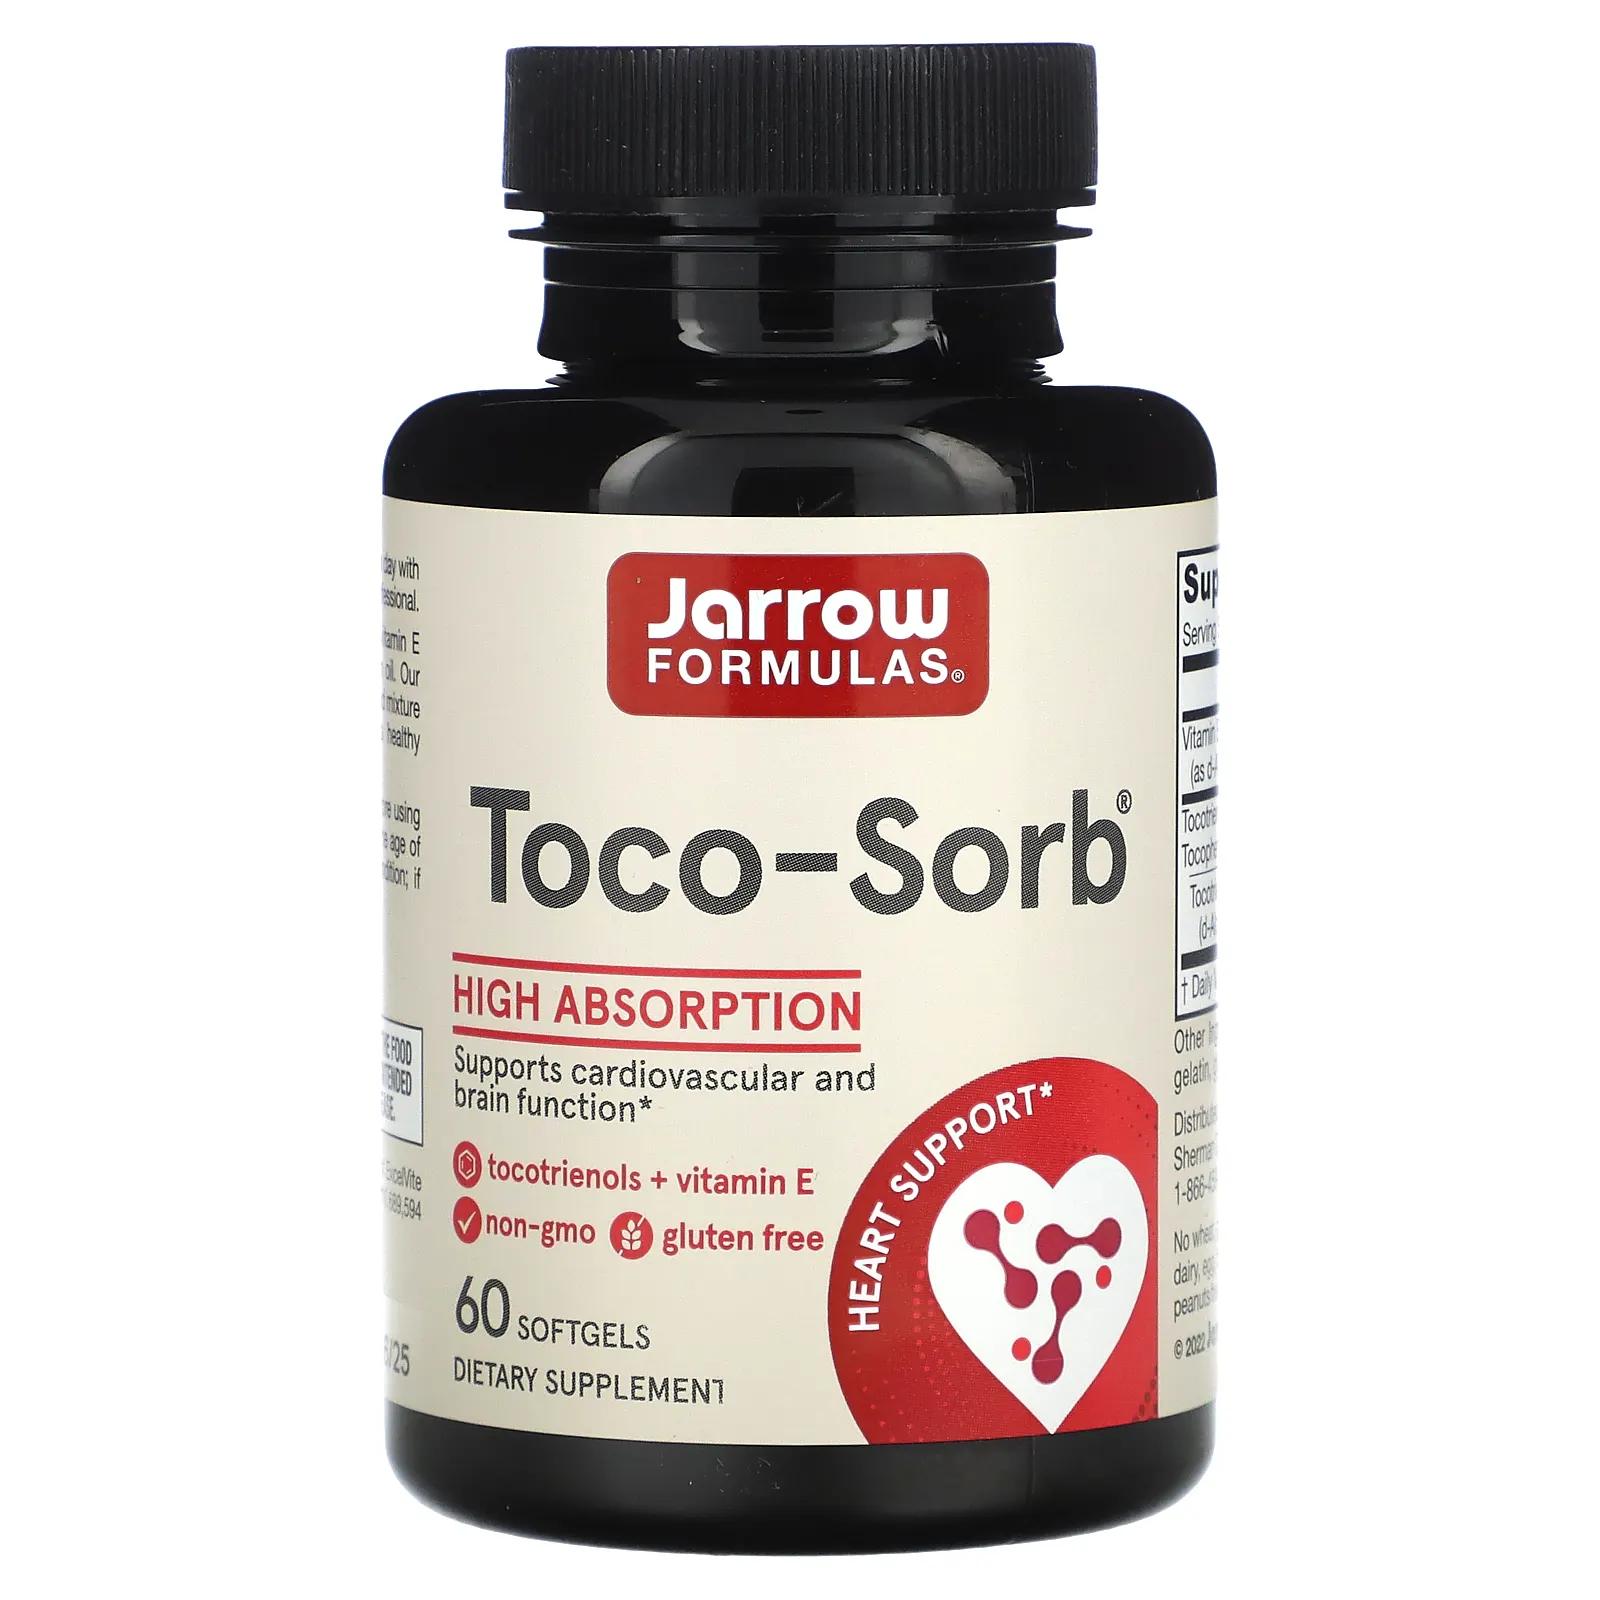 Jarrow Formulas Toco-Sorb смесь токотринола и витамина Е 60 капсул смесь токотриенолов и витамина е toco sorb 60 таблеток jarrow formula